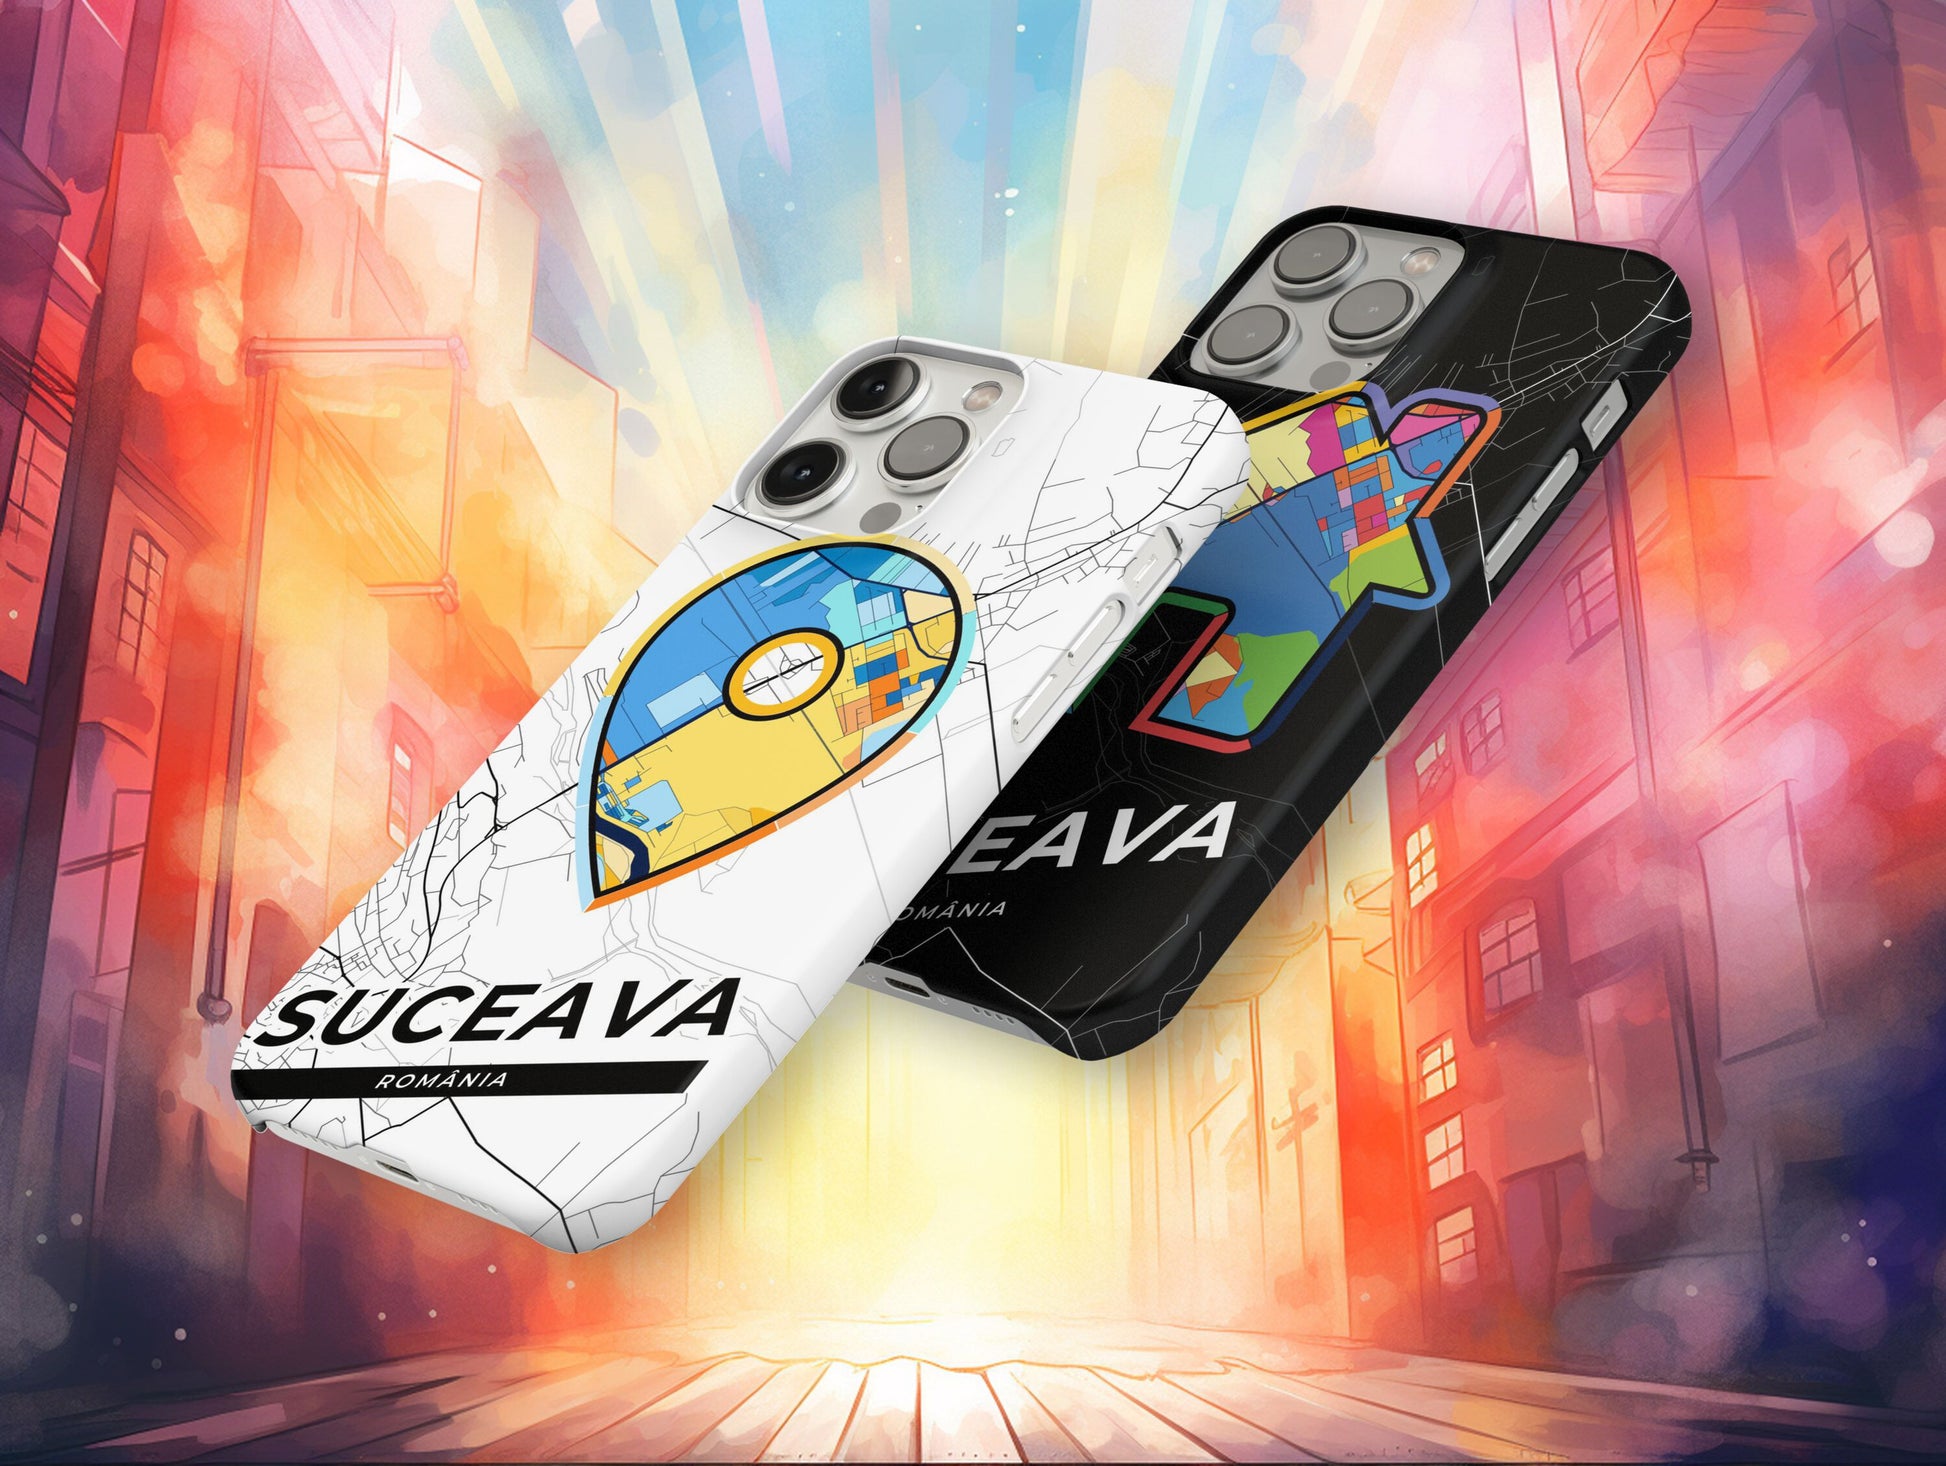 Suceava Romania slim phone case with colorful icon